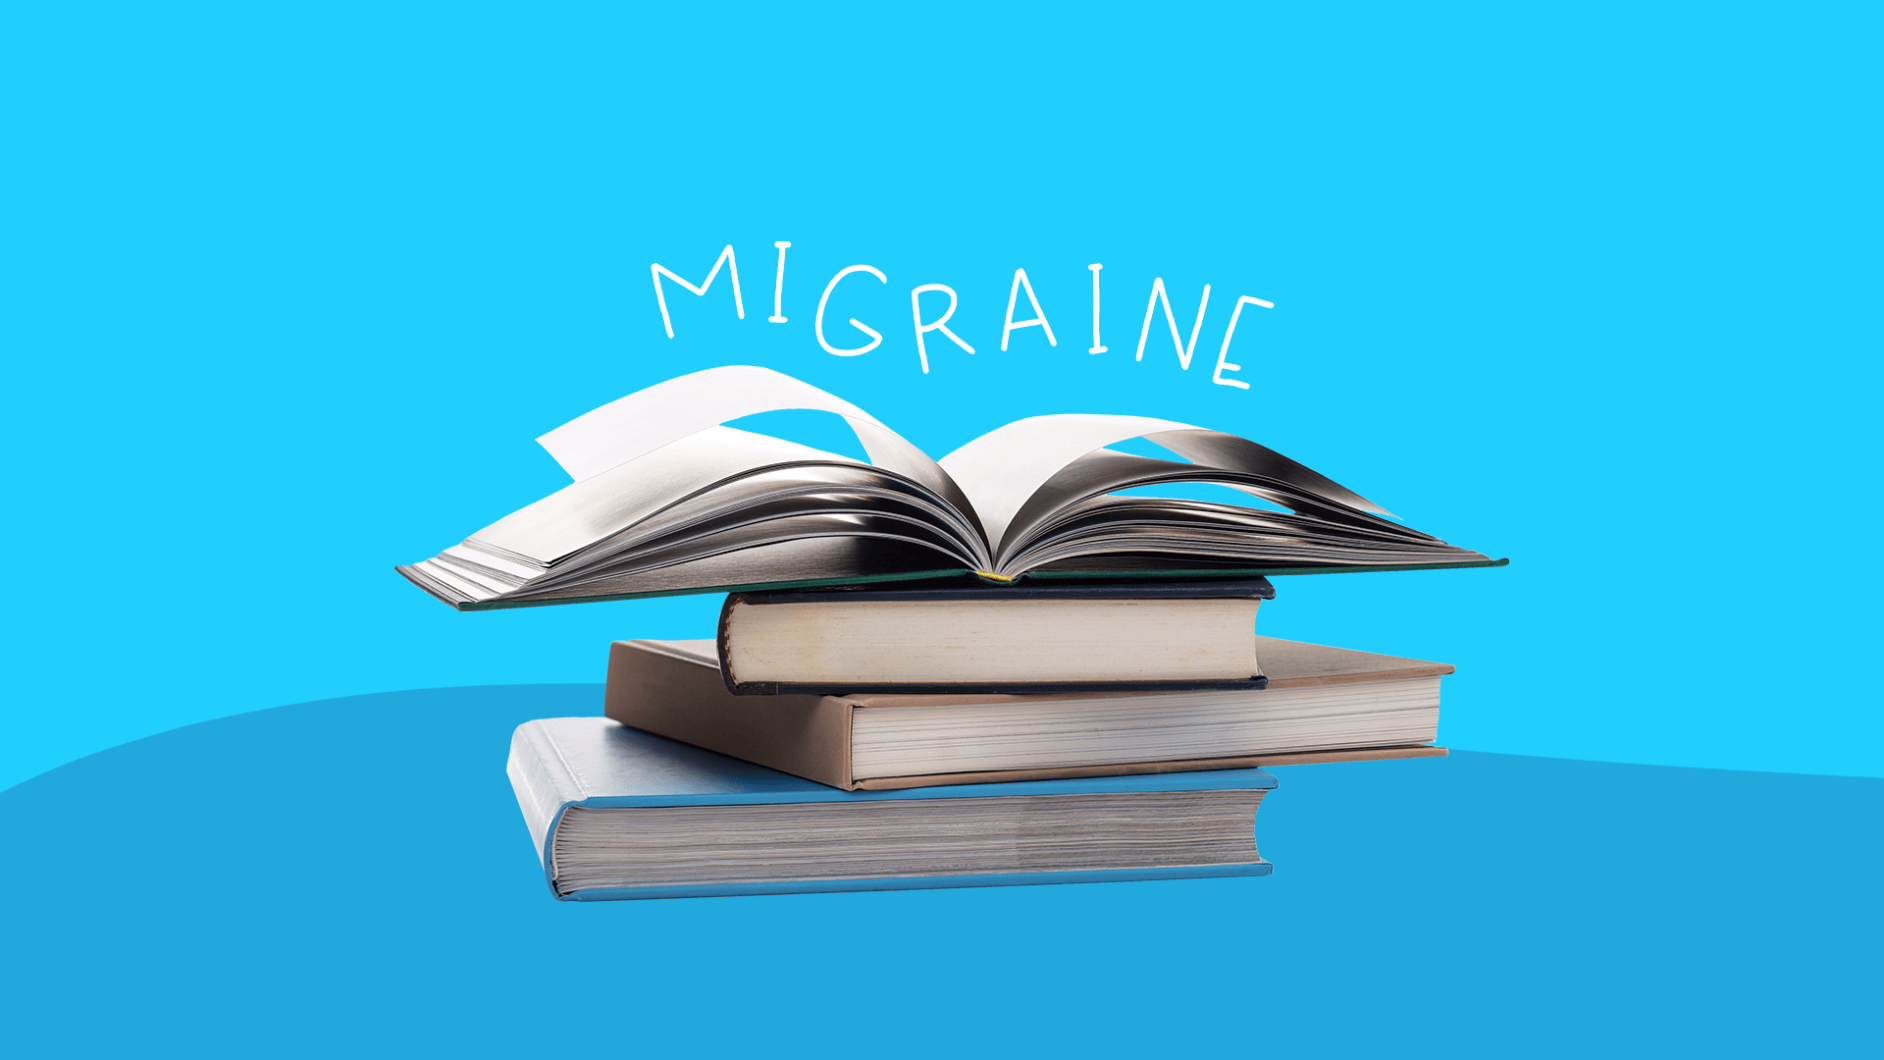 Books and the word migraine represent migraine definition